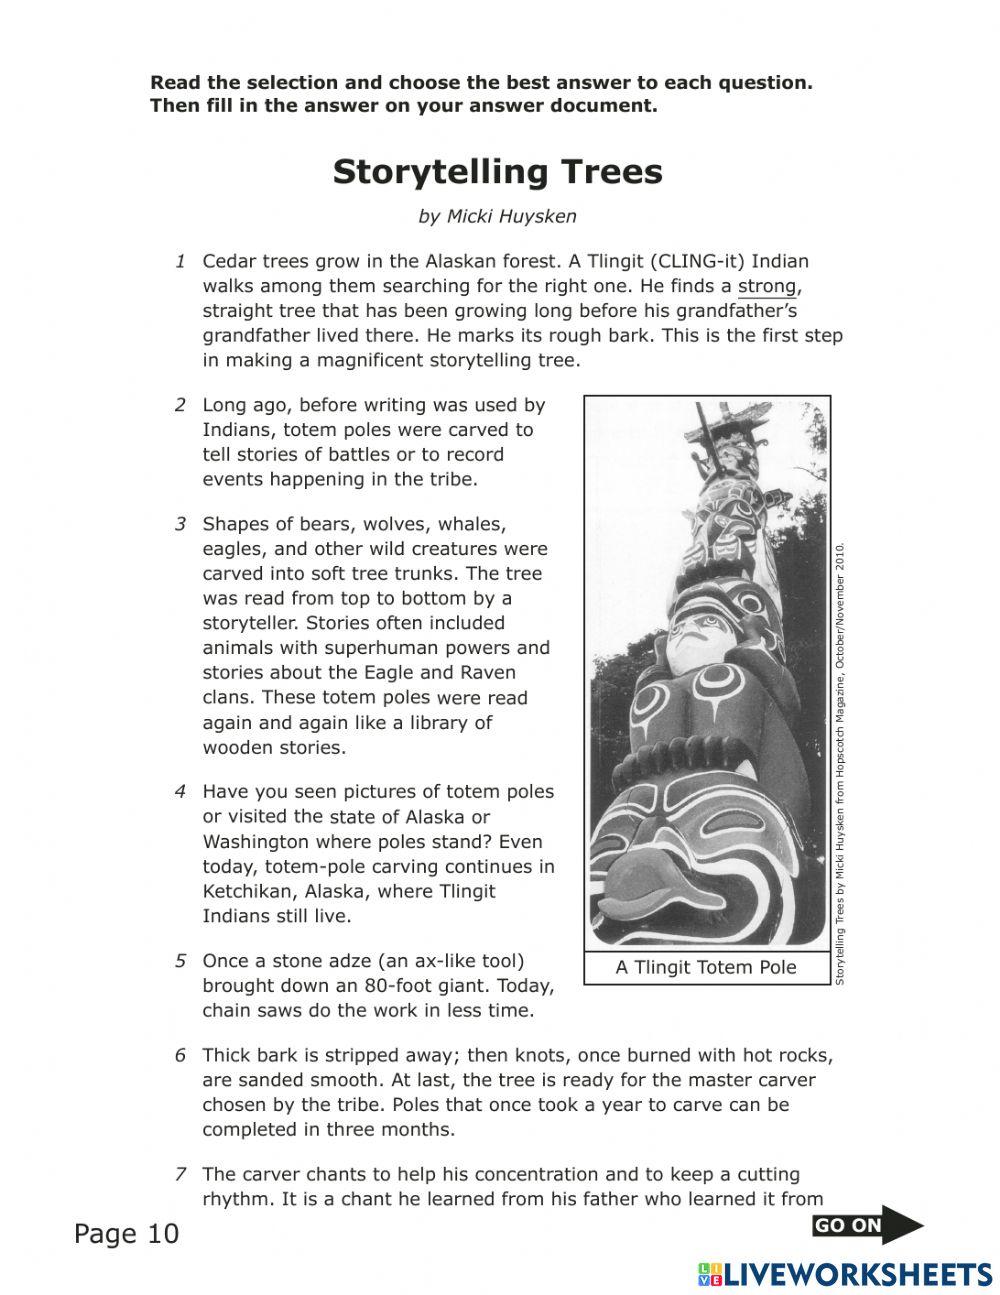 Storytelling Trees